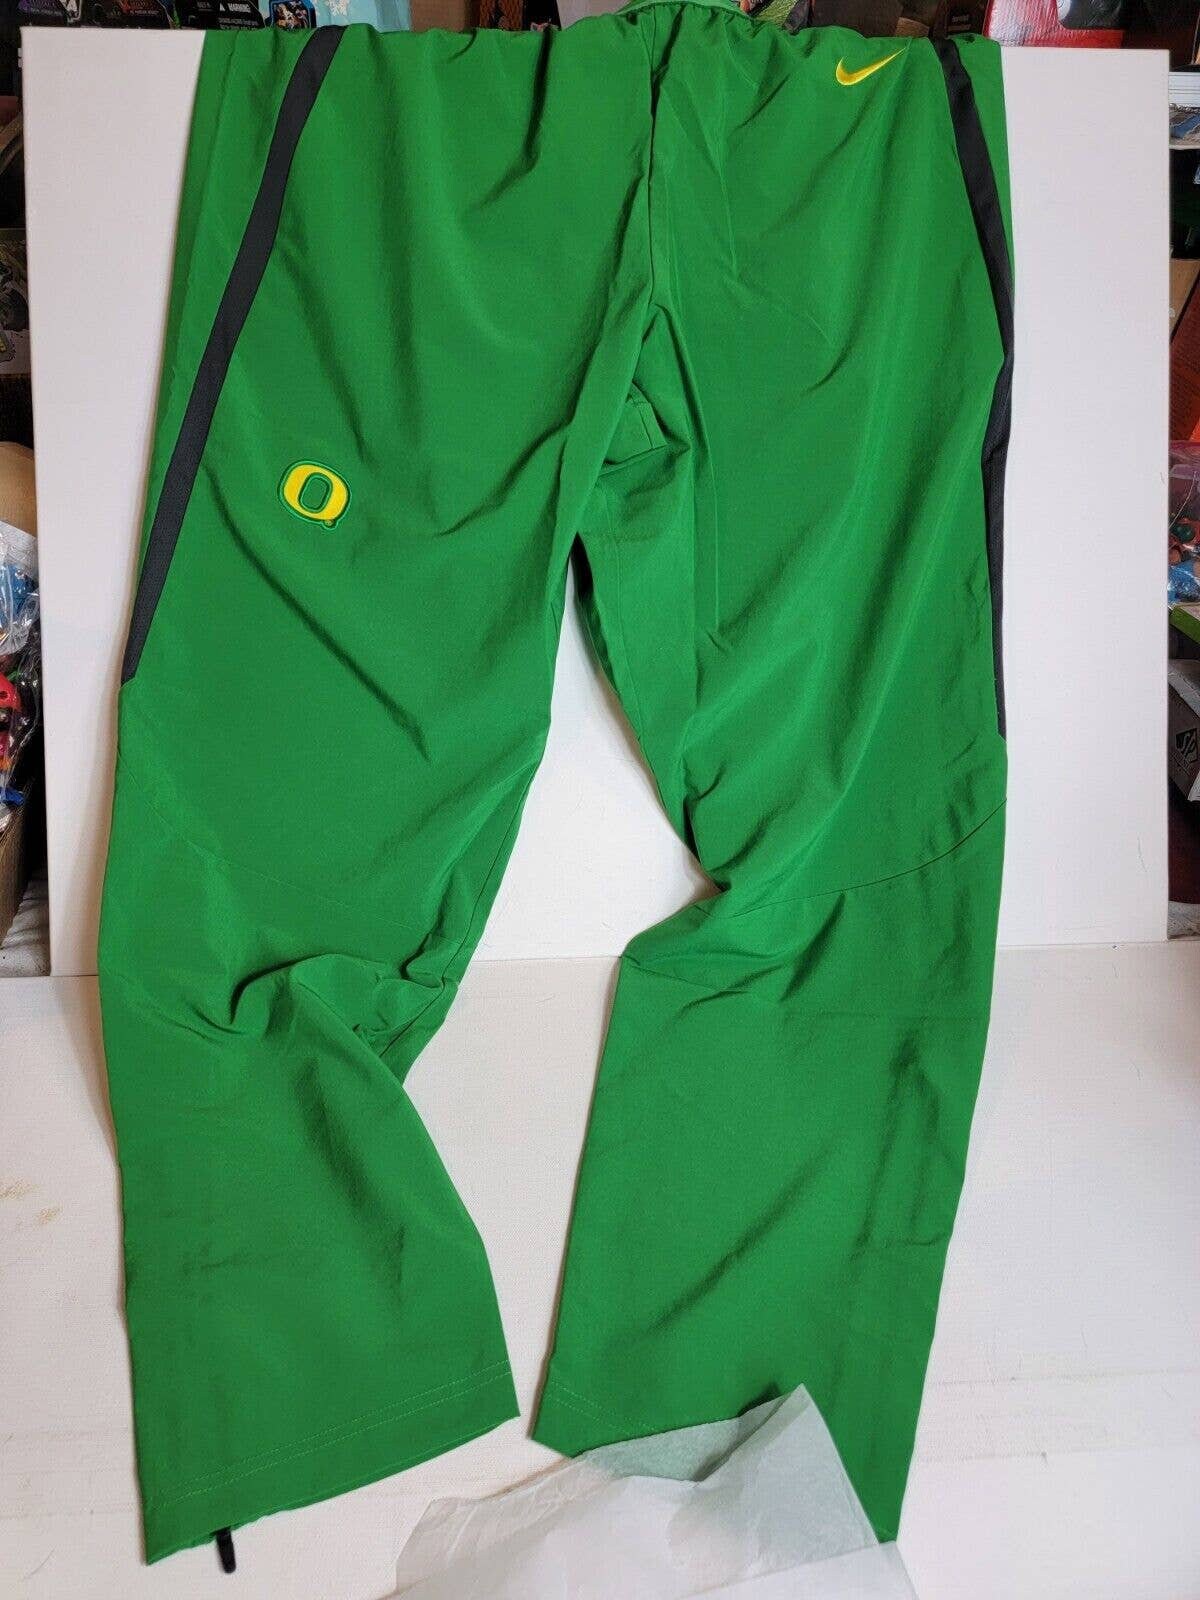 Oregon Ducks retro Nike football Jersey size XXL green & yellow BONUS FREE  SHIRT